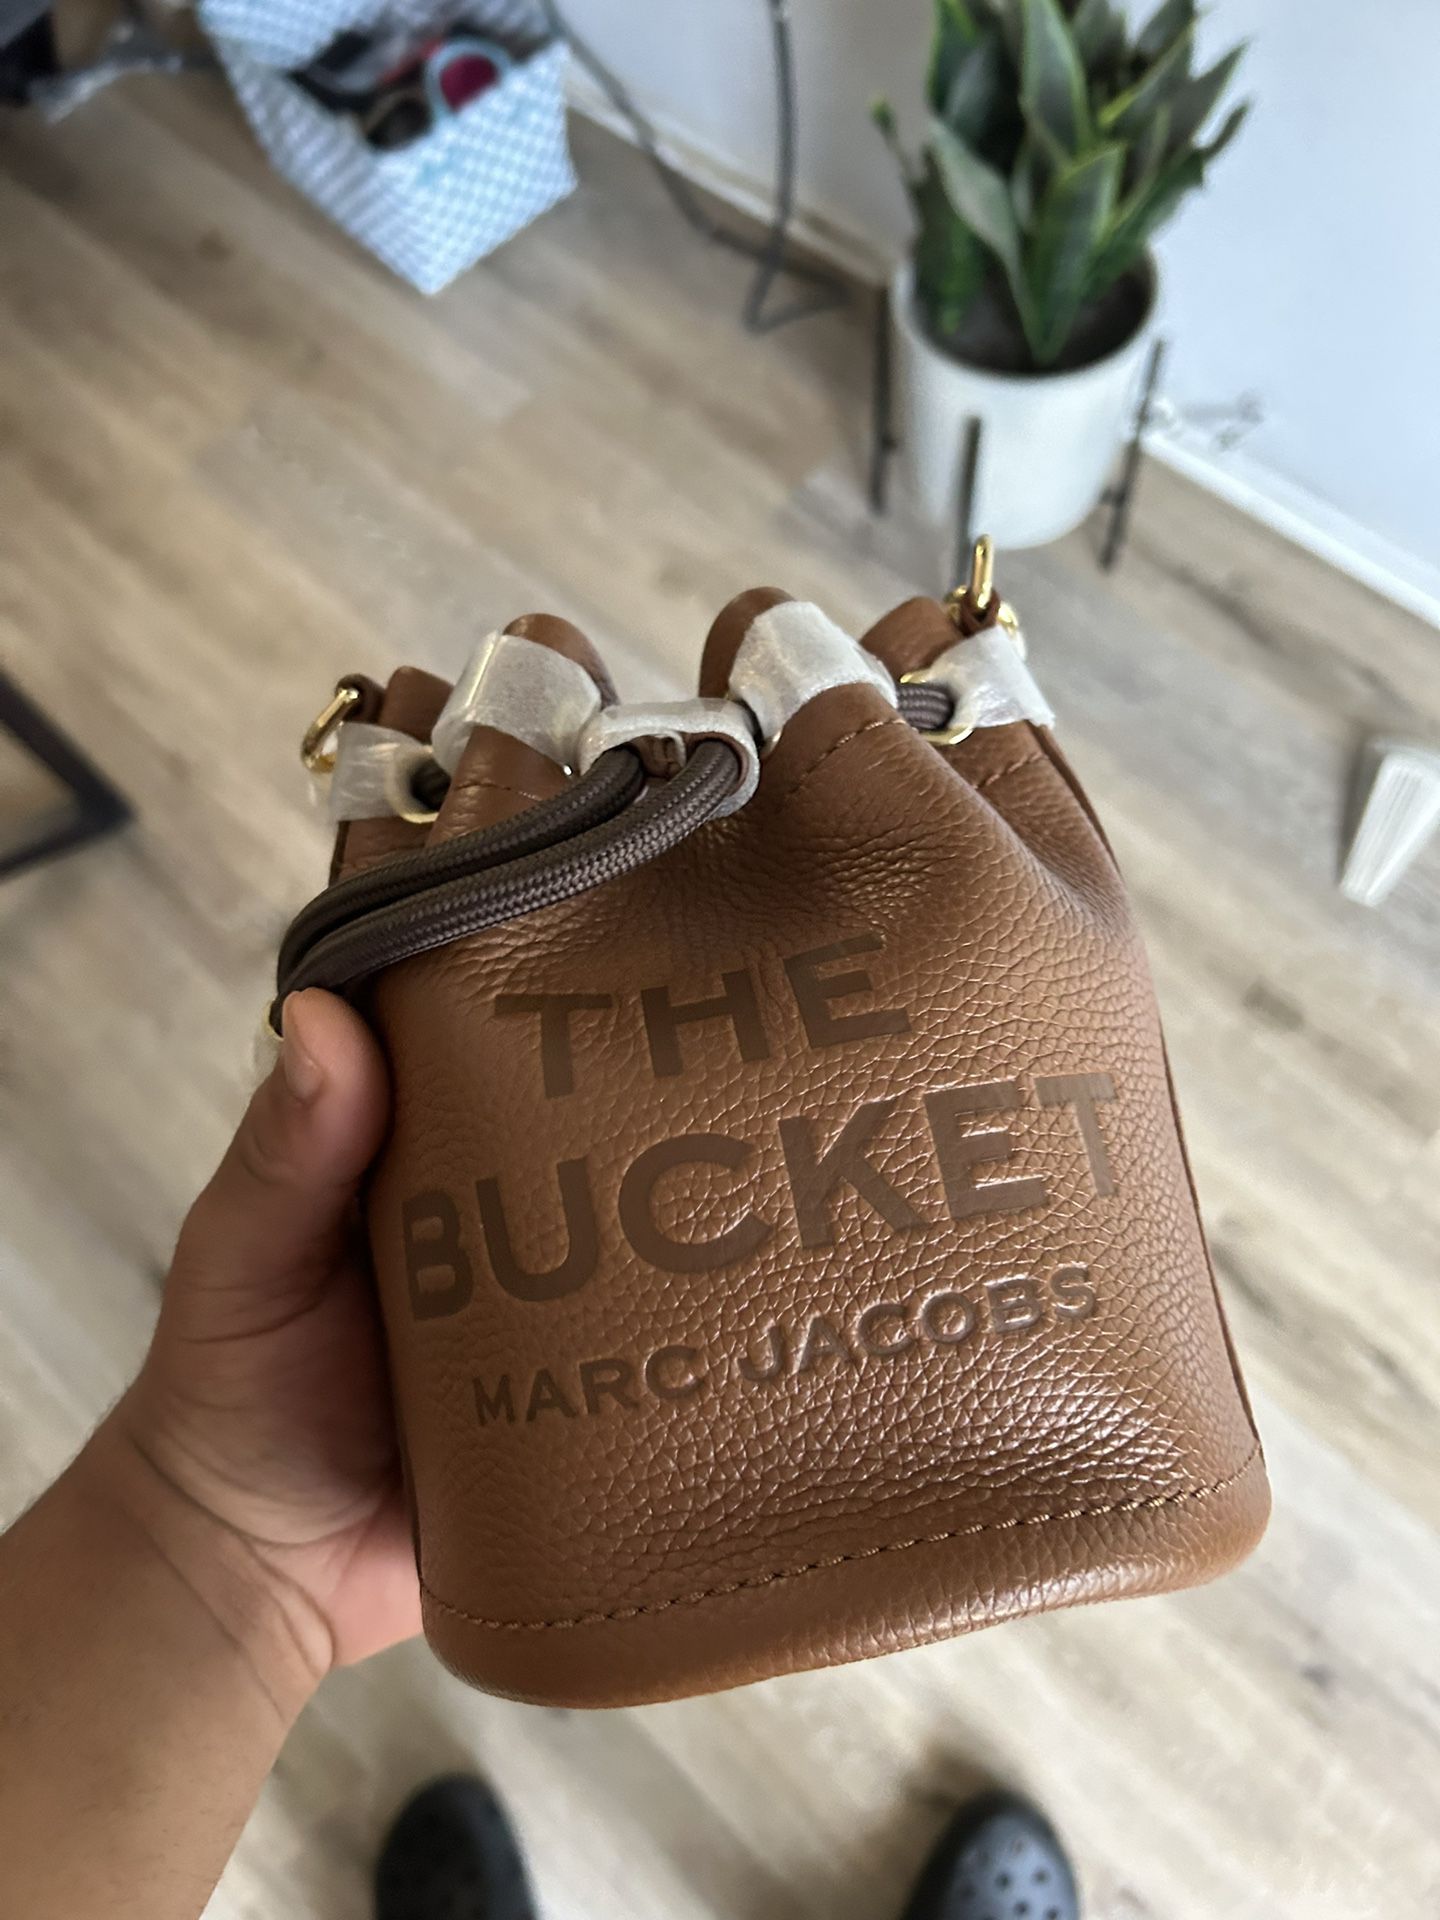 Marc Jacobs Bag